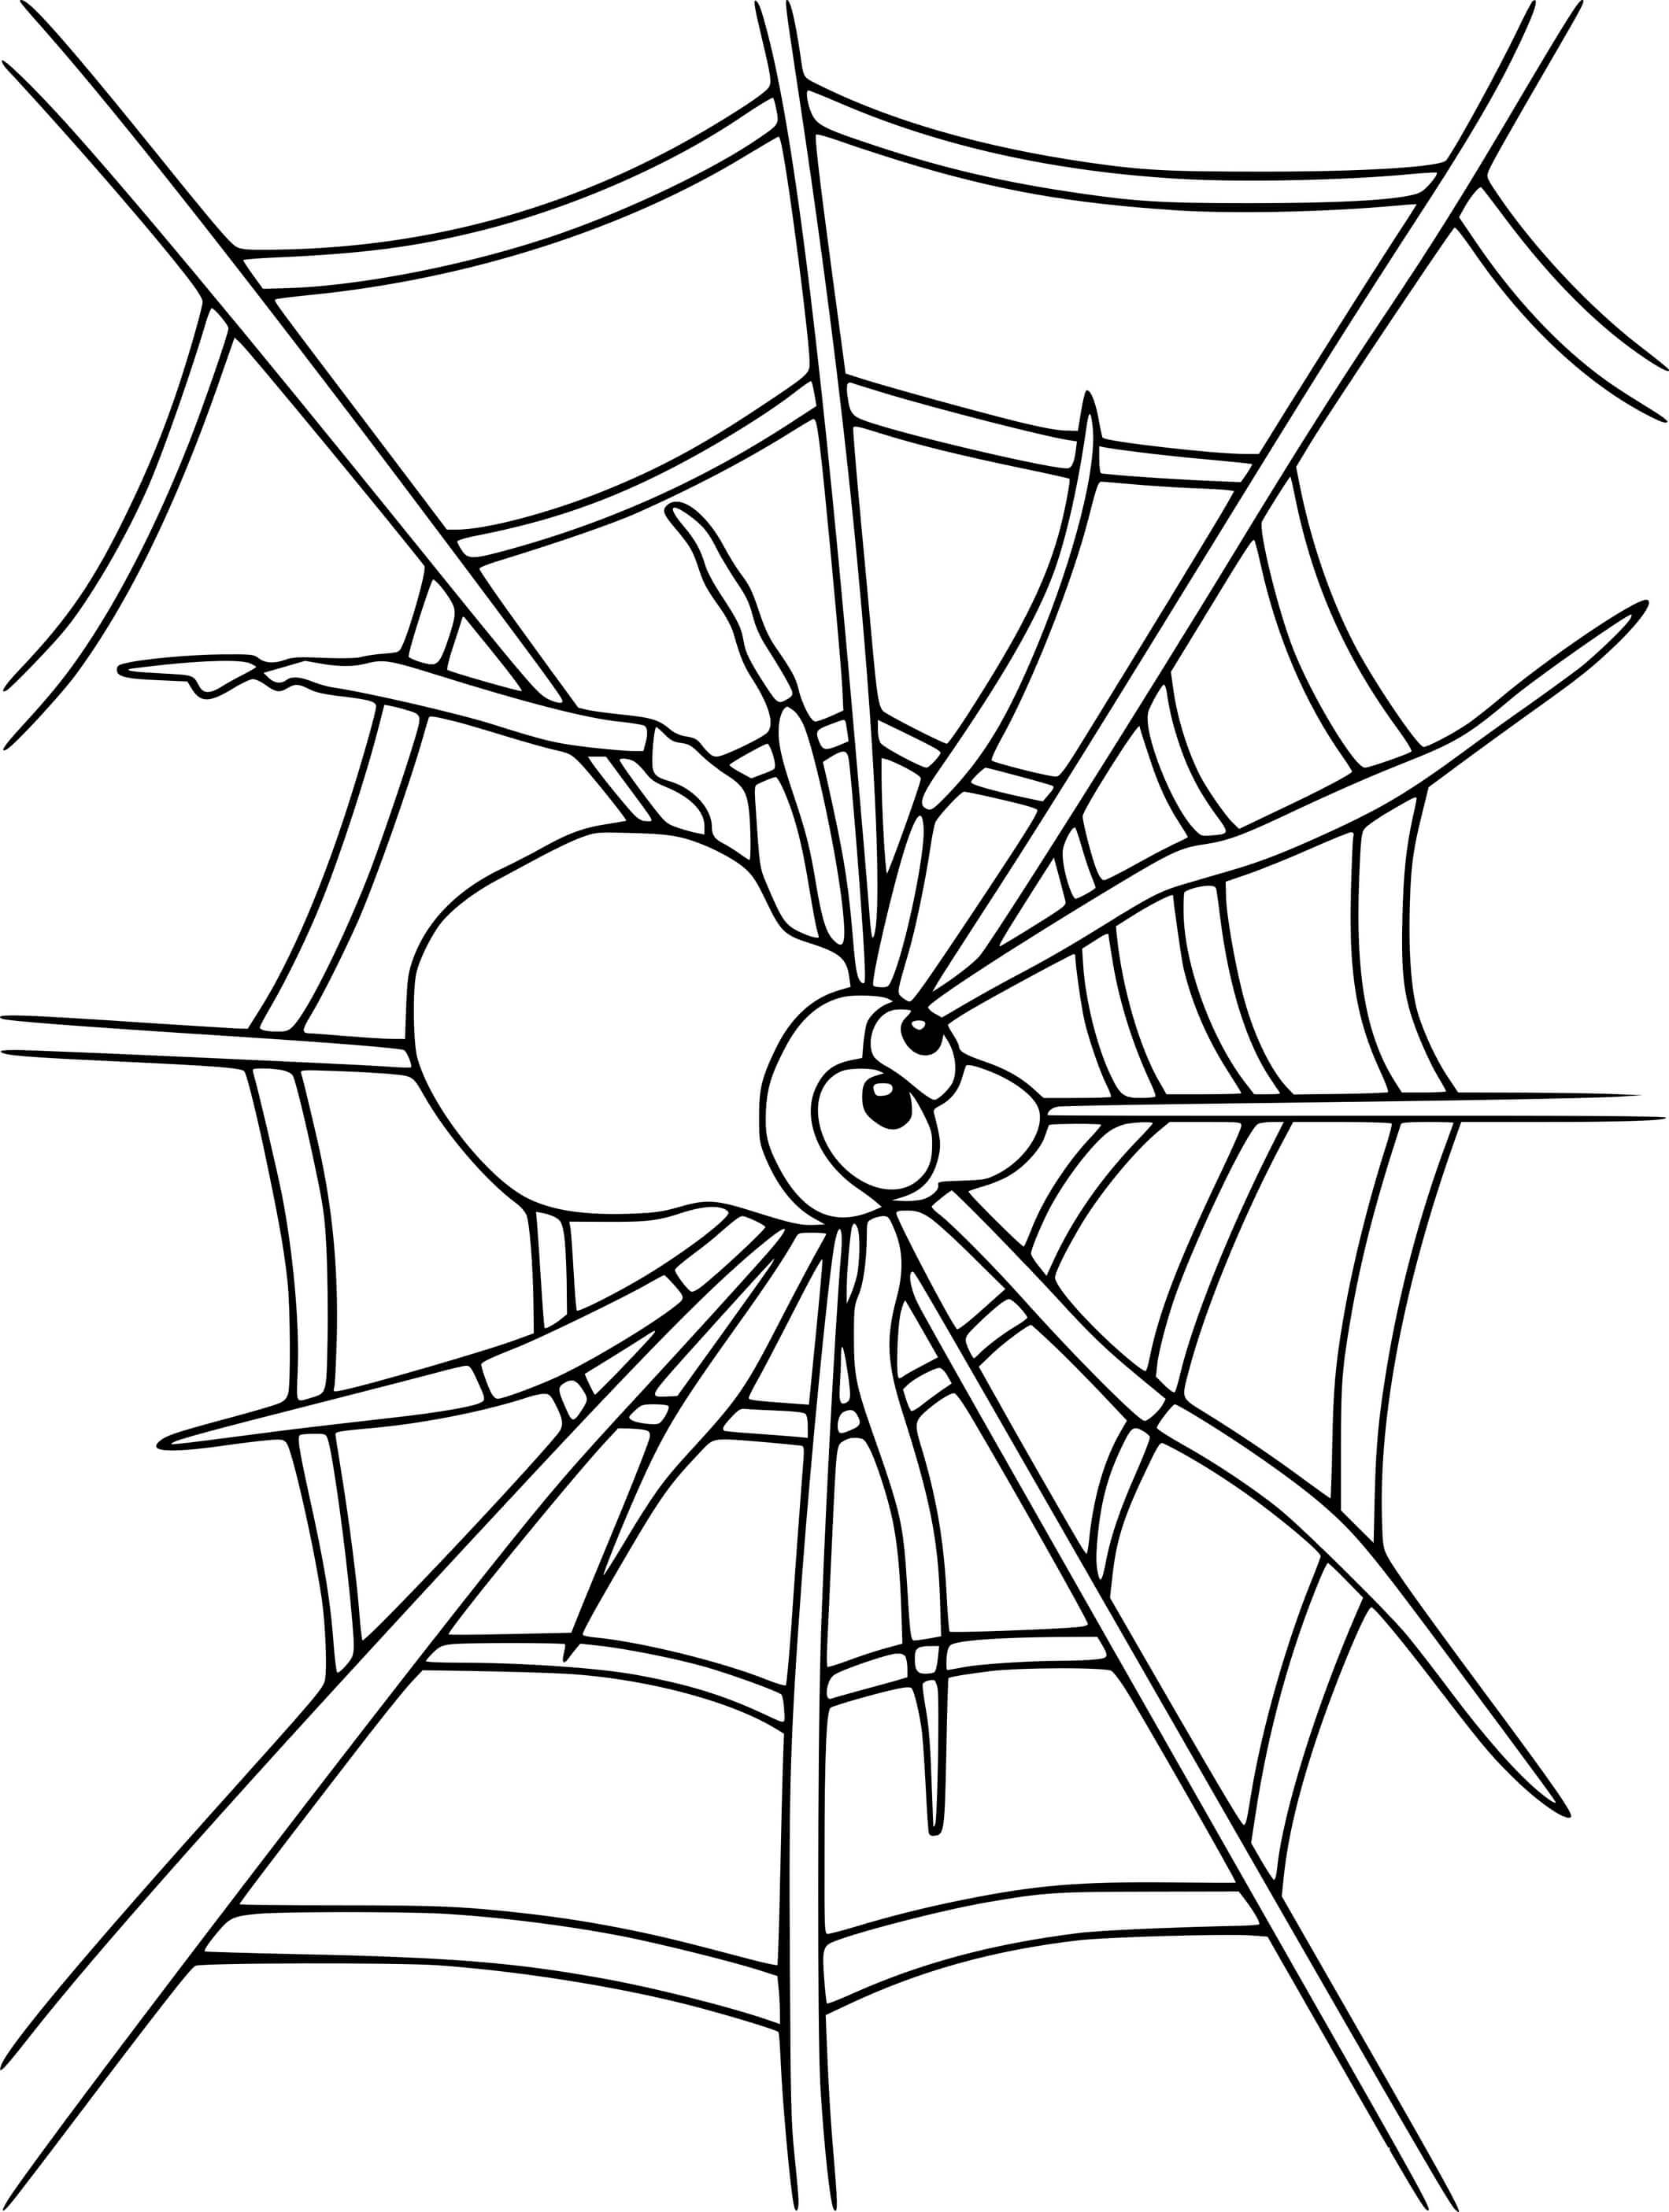 Cartoon Spider On The Web